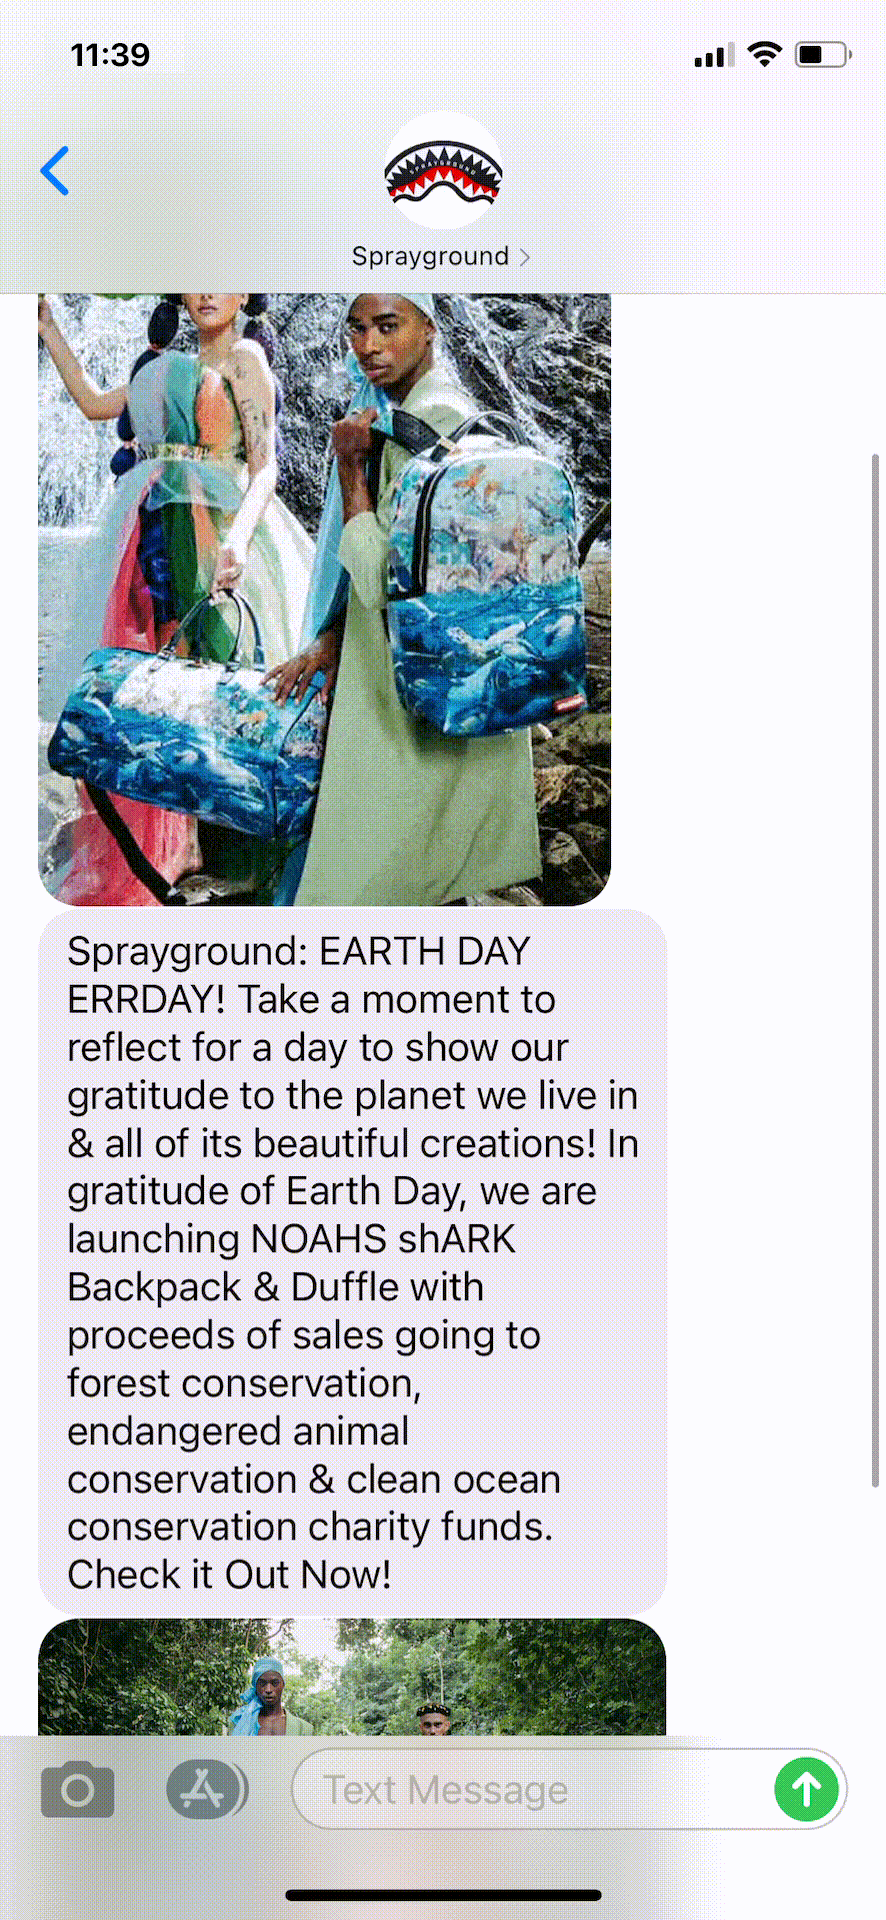 Sprayground-Text-Message-Marketing-Example-04.22.2021